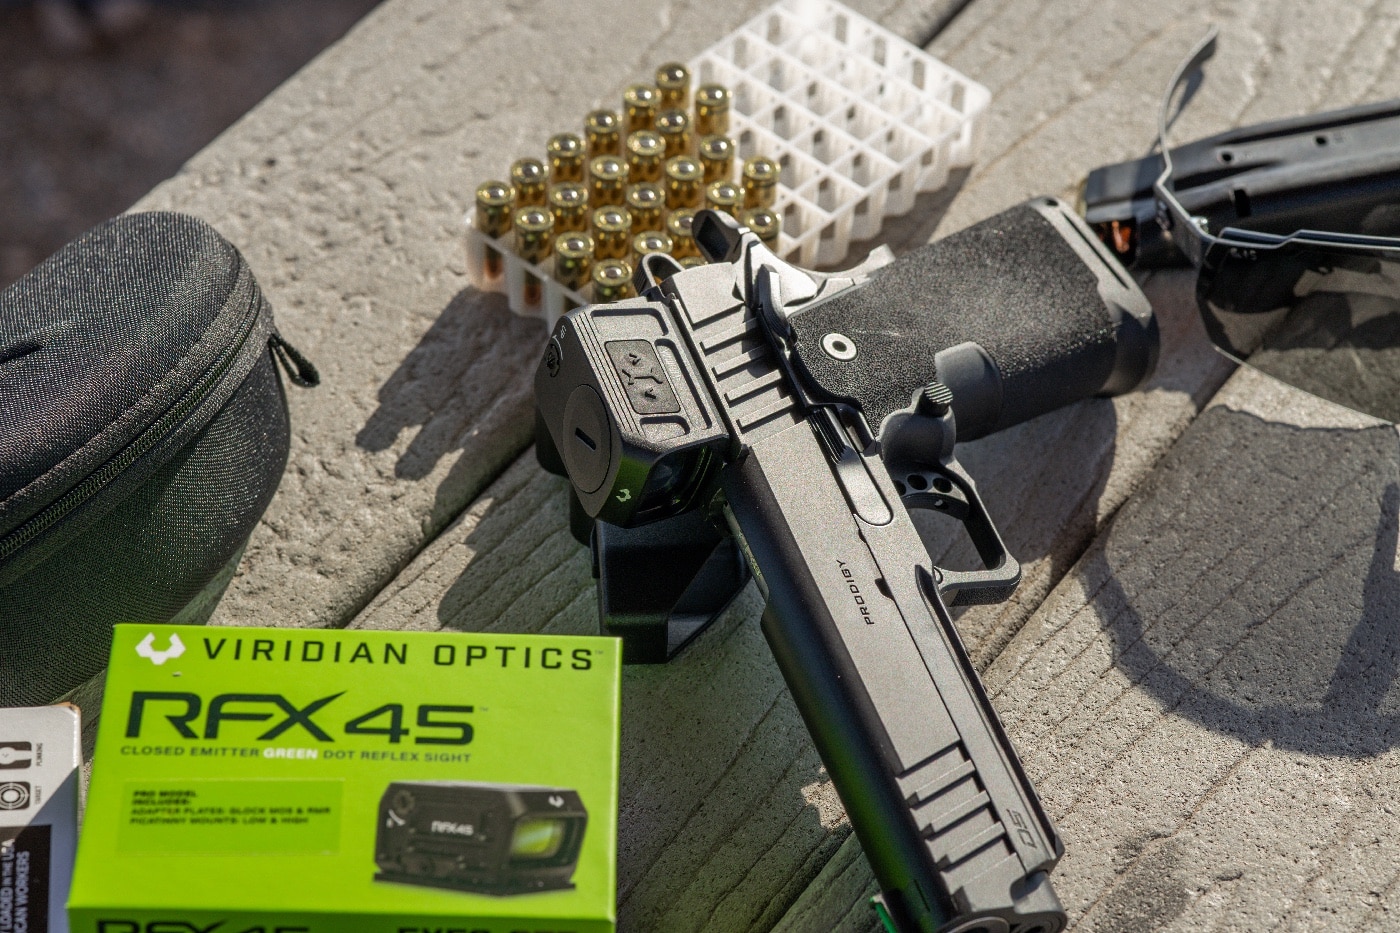 viridian closed emitter green dot sight mounted on 9mm handgun on the range testing